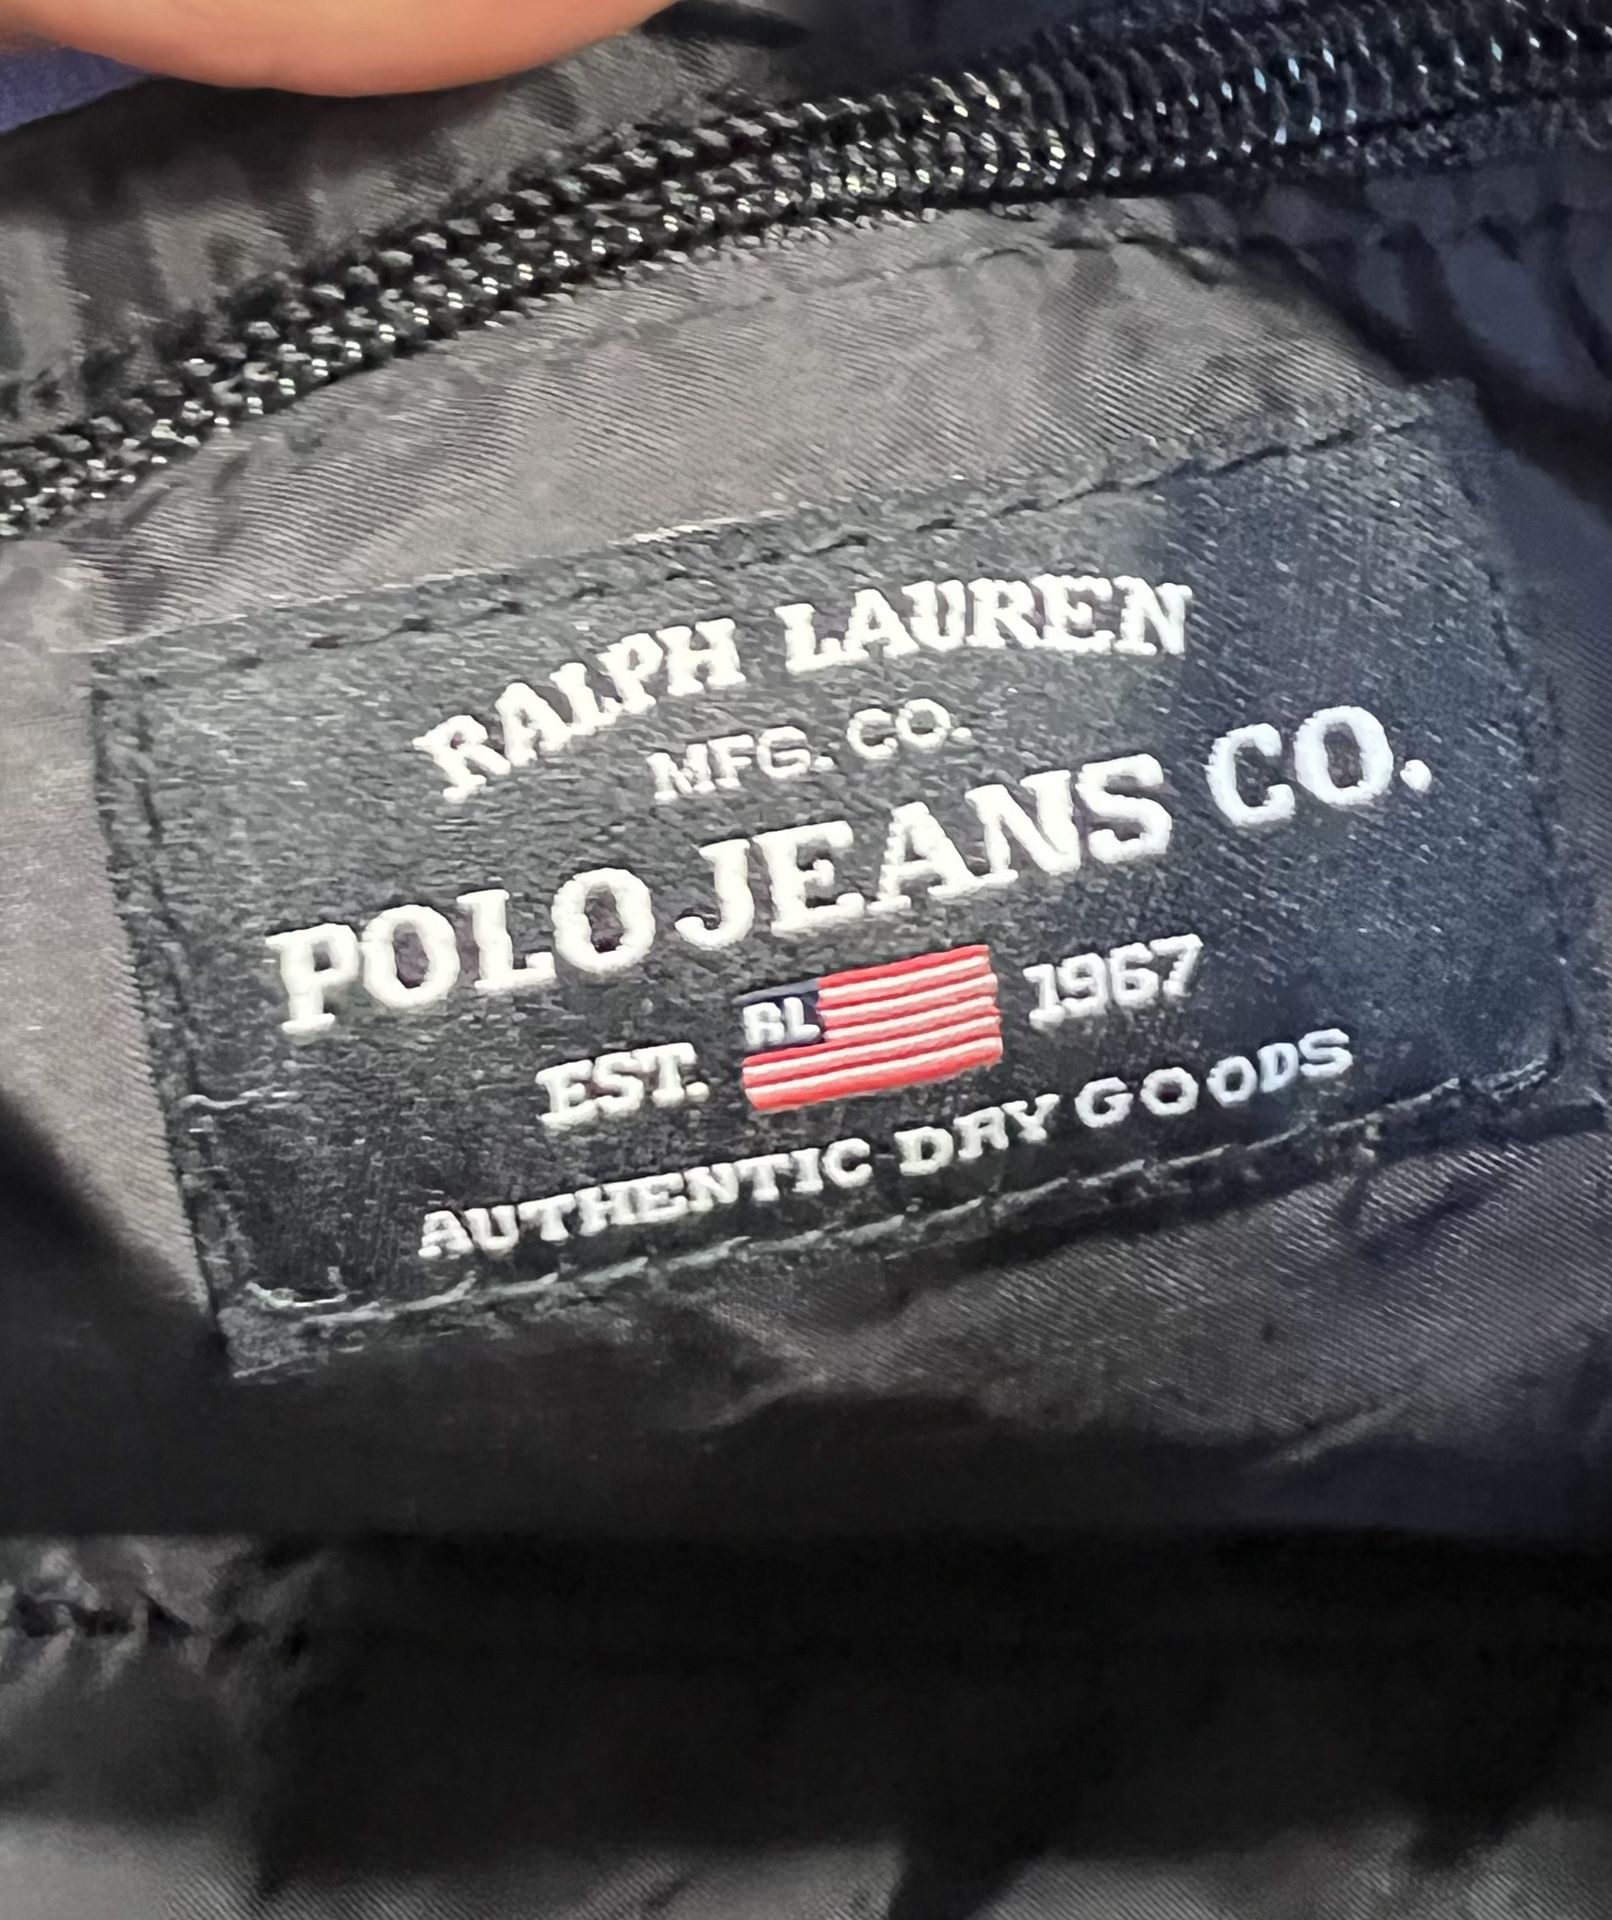 Polo Jeans Co Ralph Lauren Authentic Dry Goods Small purple Bag